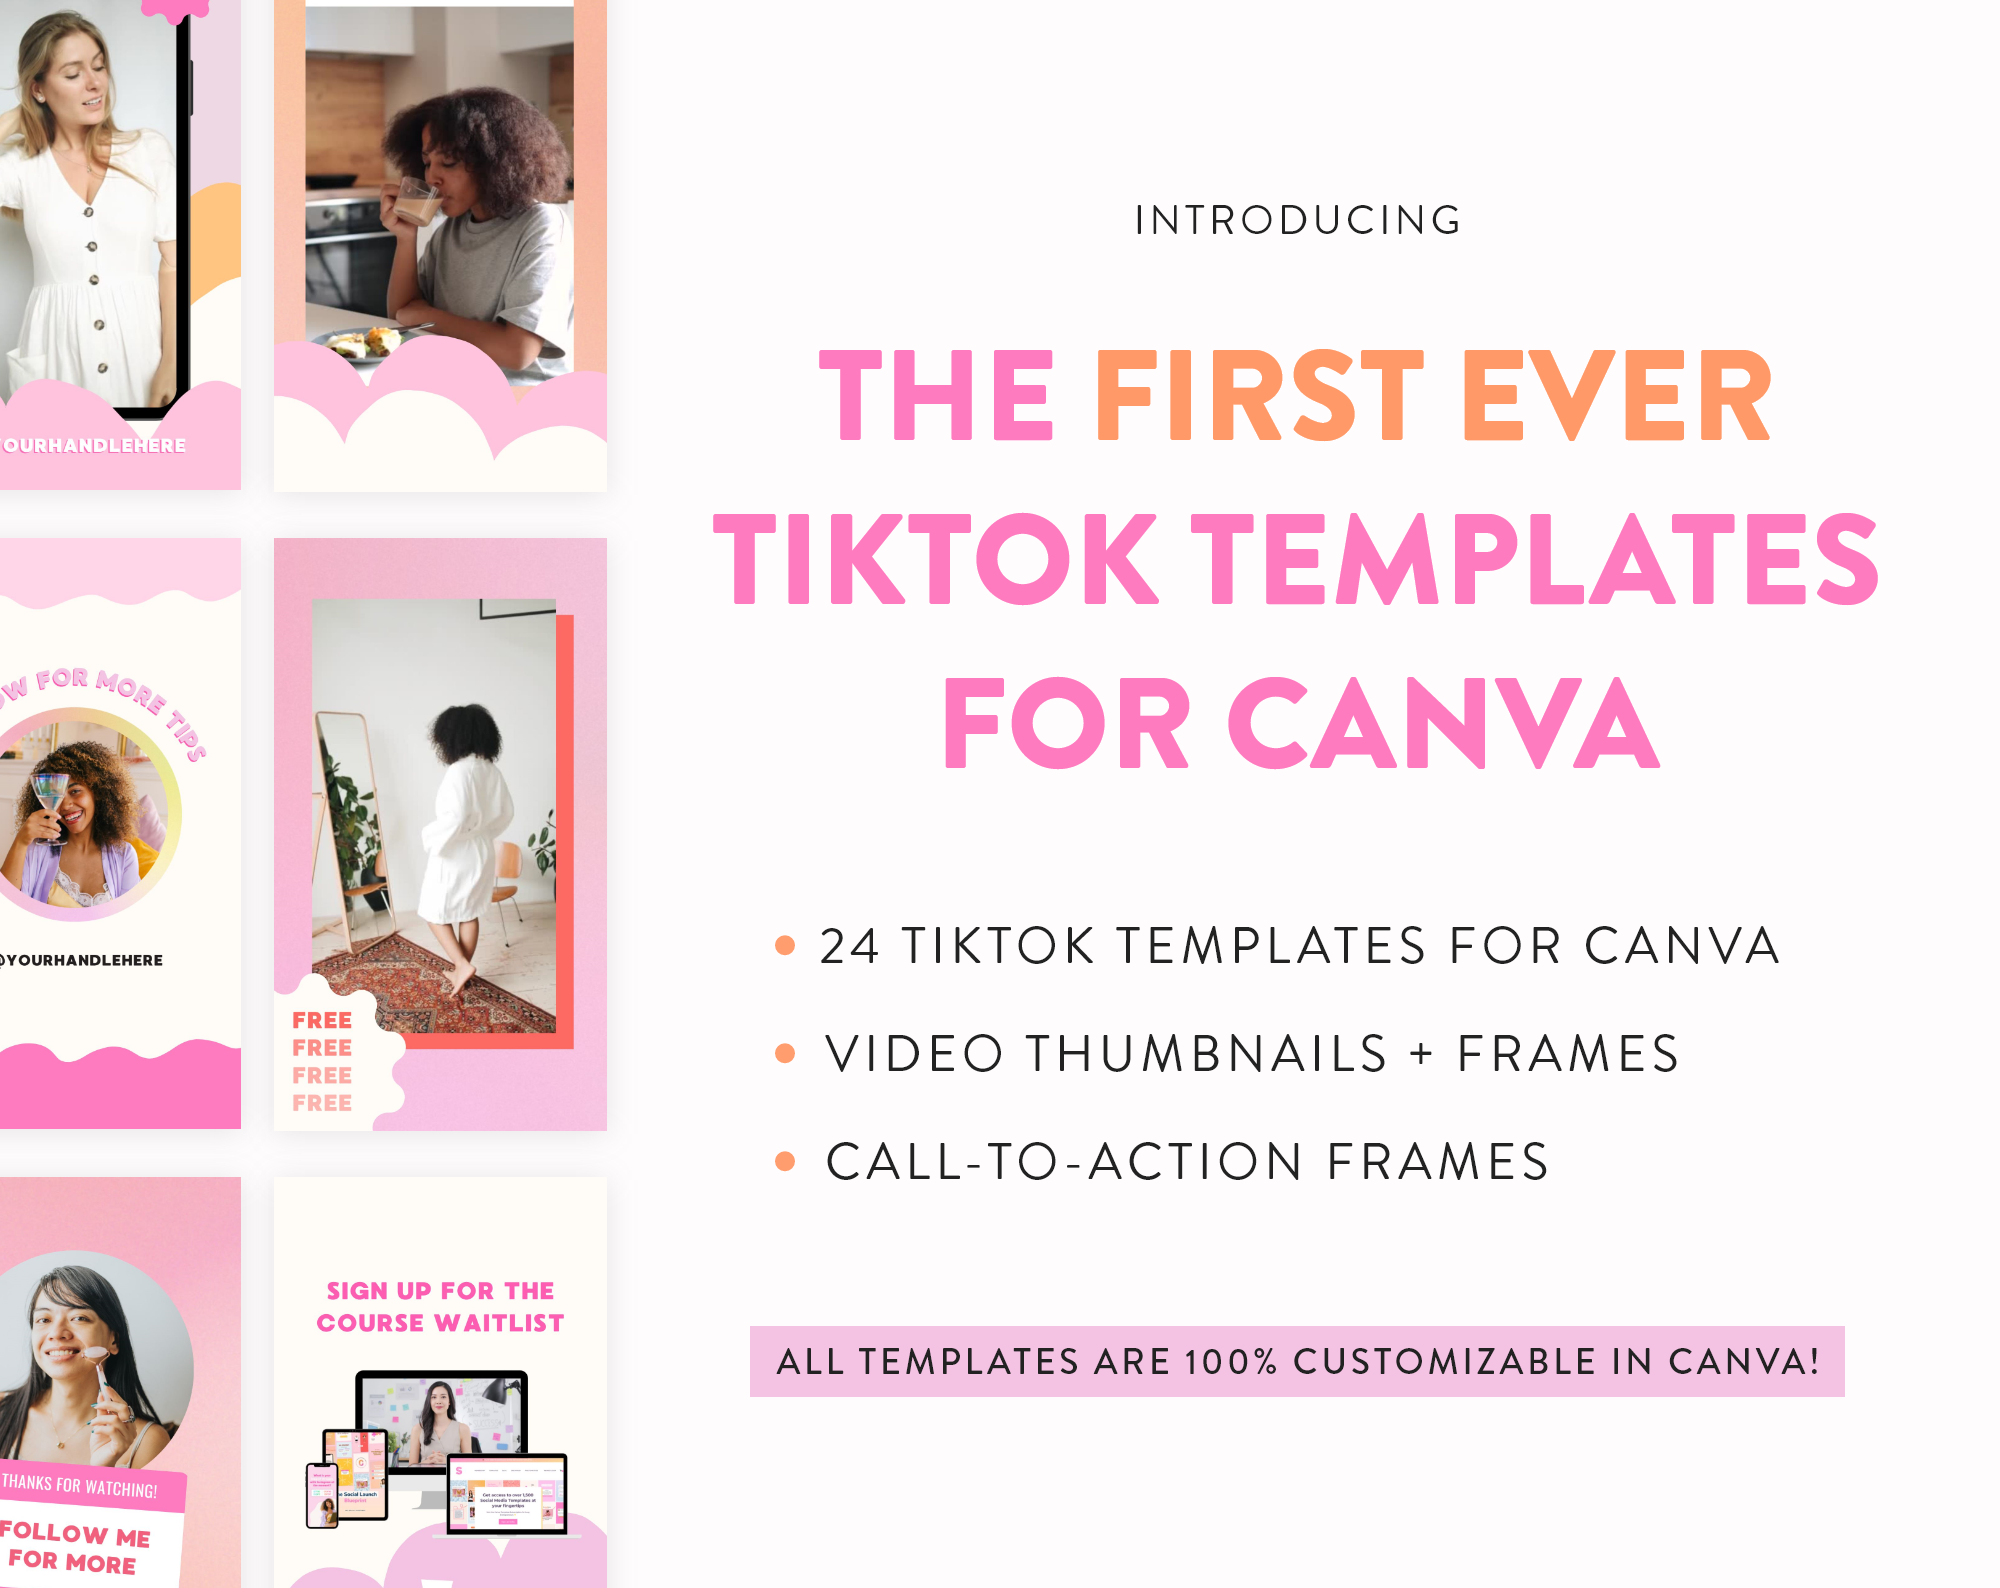 tiktok-marketing-templates-for-canva-intro-2